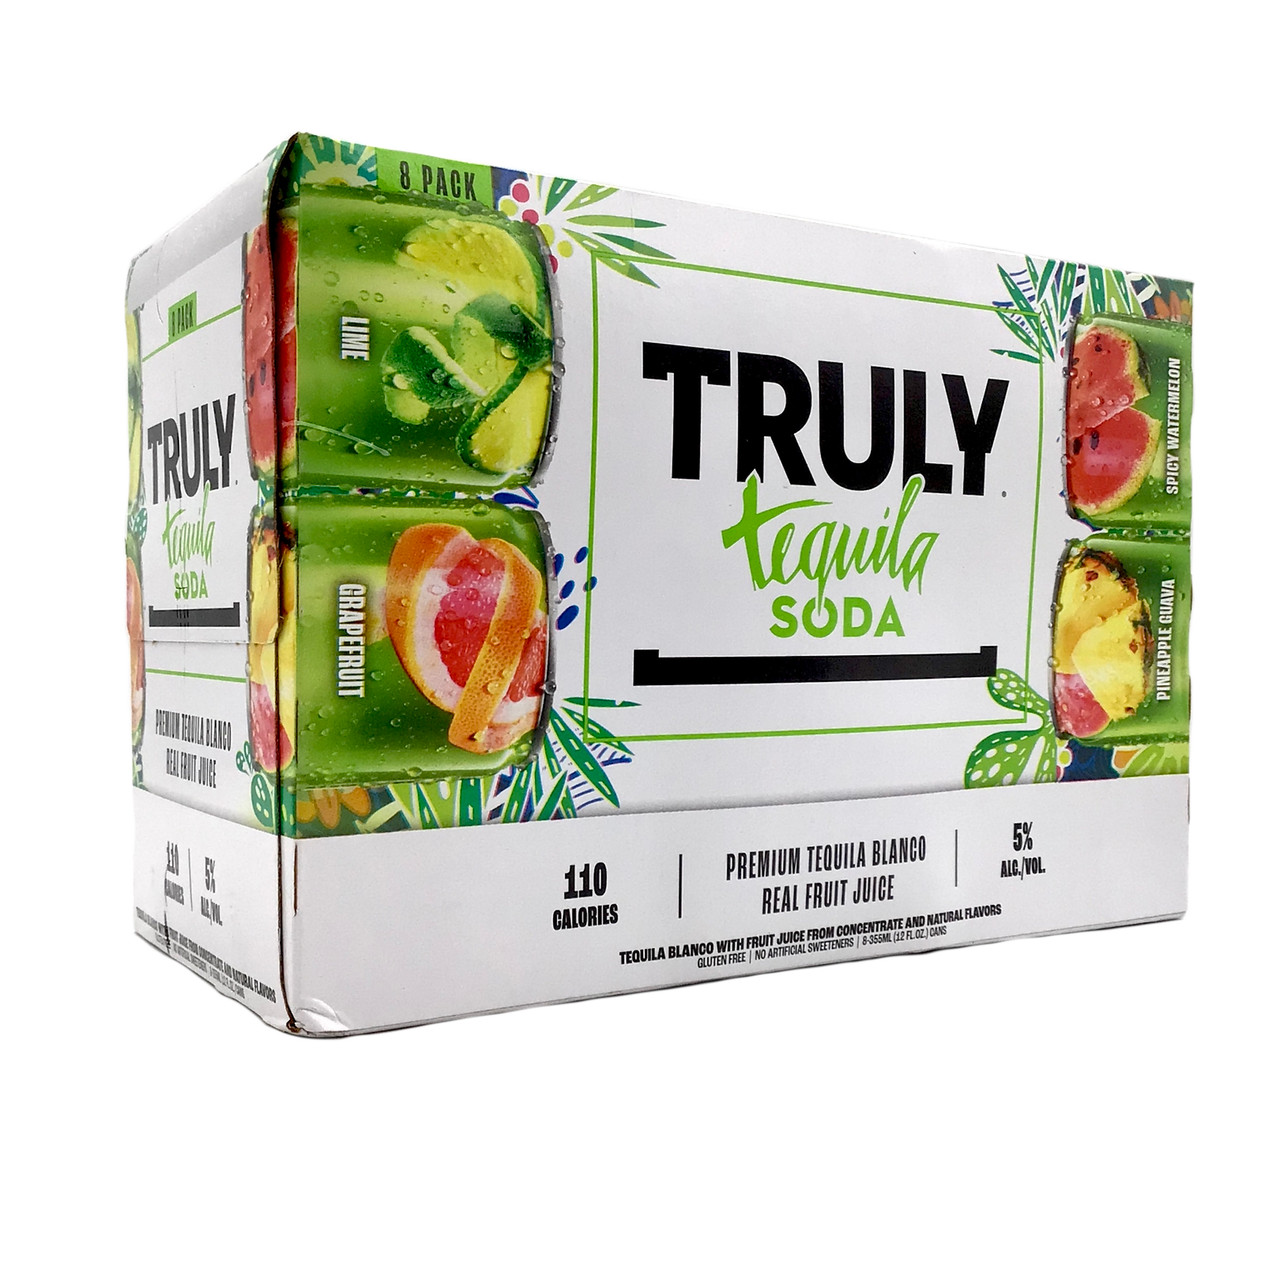 BUY TRULY TEQUILA SODA VARIETY 8PAK | Fridley Liquor